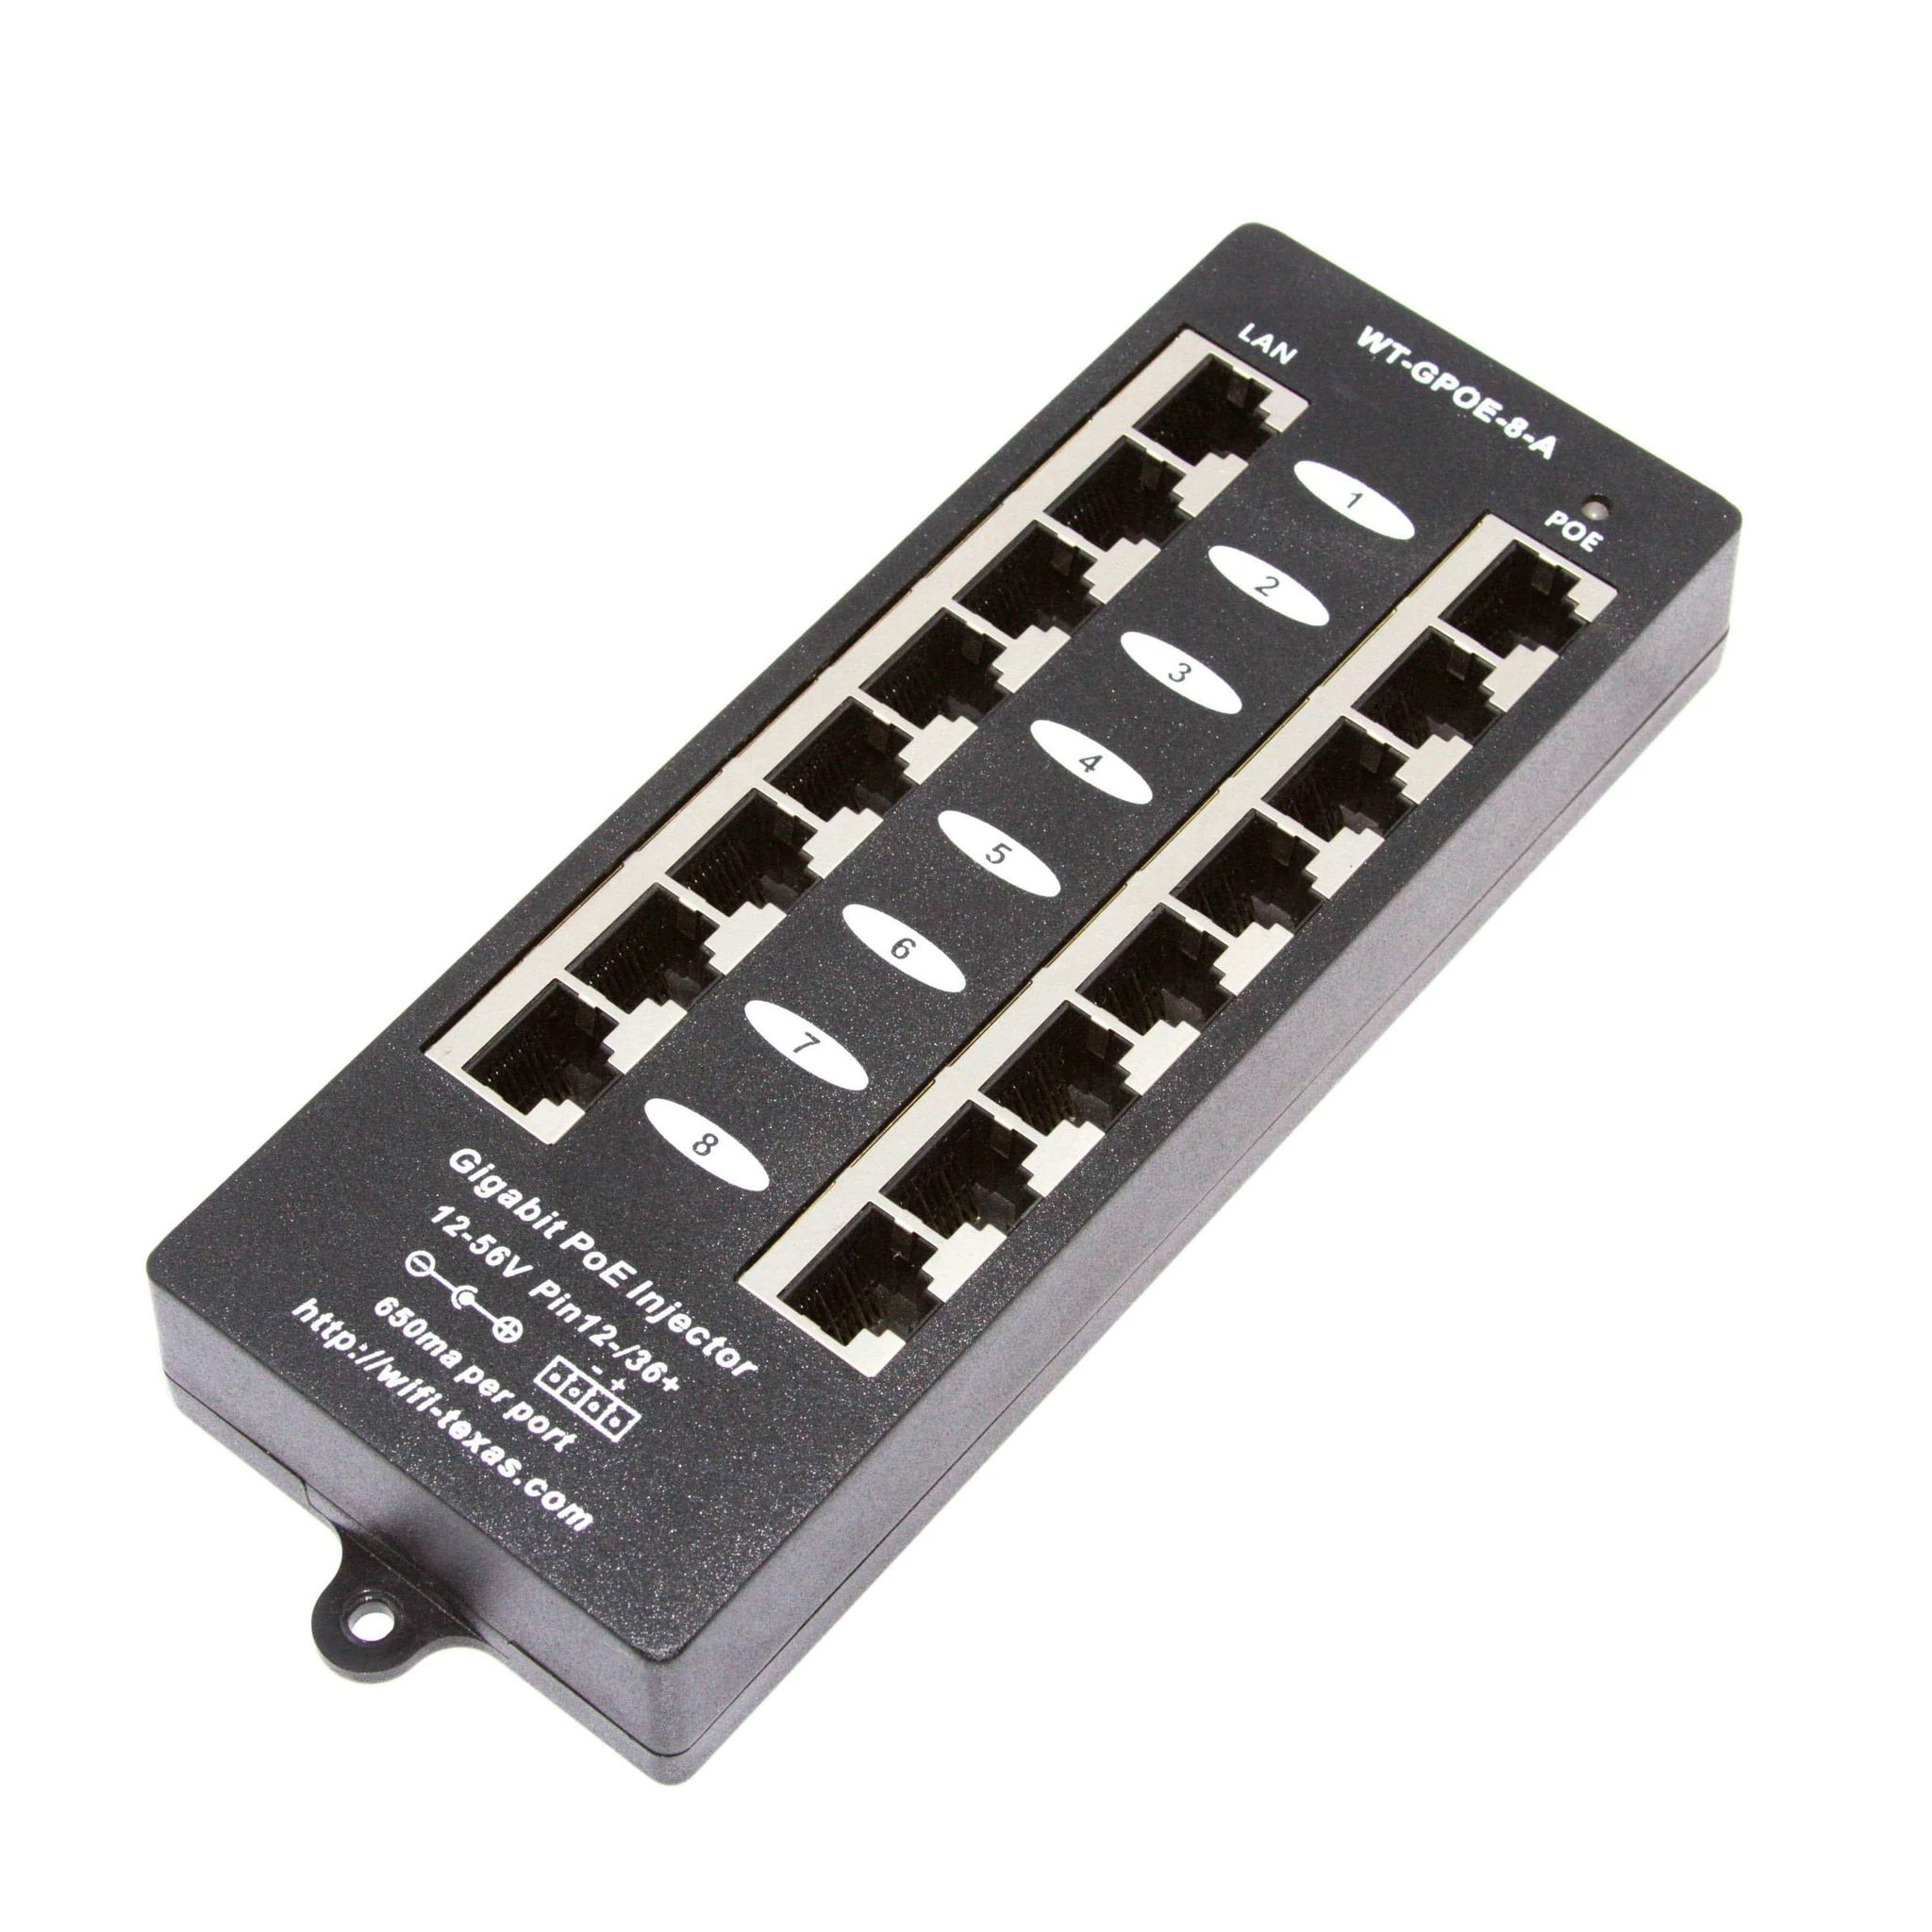 https://usbroadcast.co/wp-content/uploads/2022/02/poe-texas-injector-8-port-gigabit-mode-a-poe-injector-with-48-volt-60-watt-power-supply.jpg